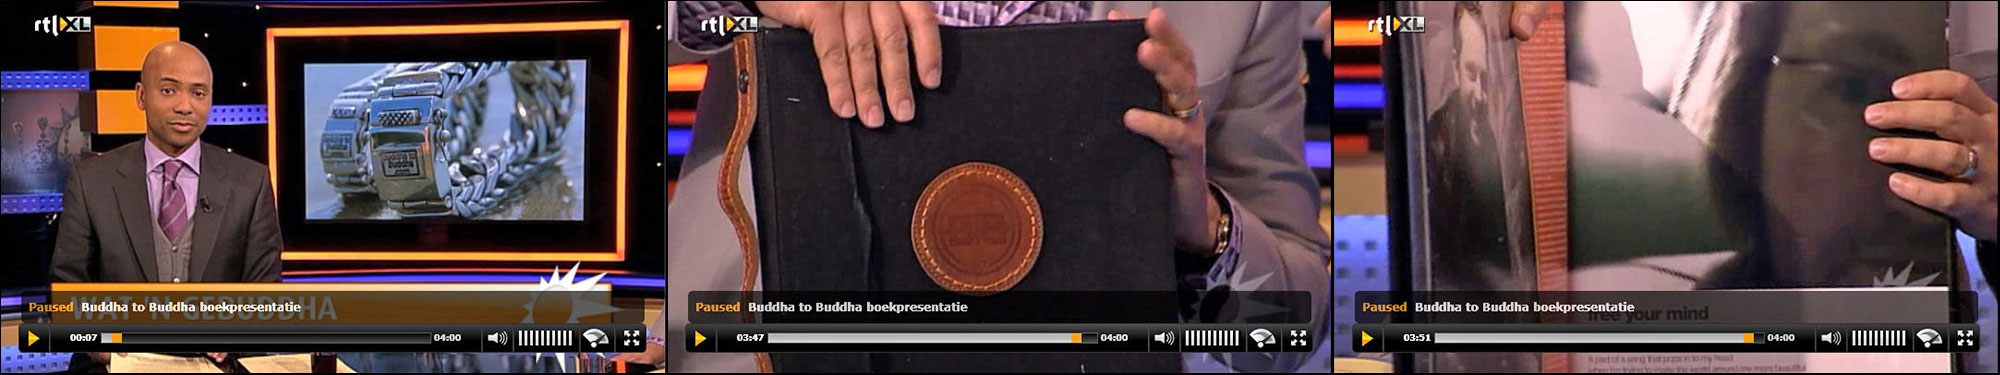 Buddha to Buddha - book on TV